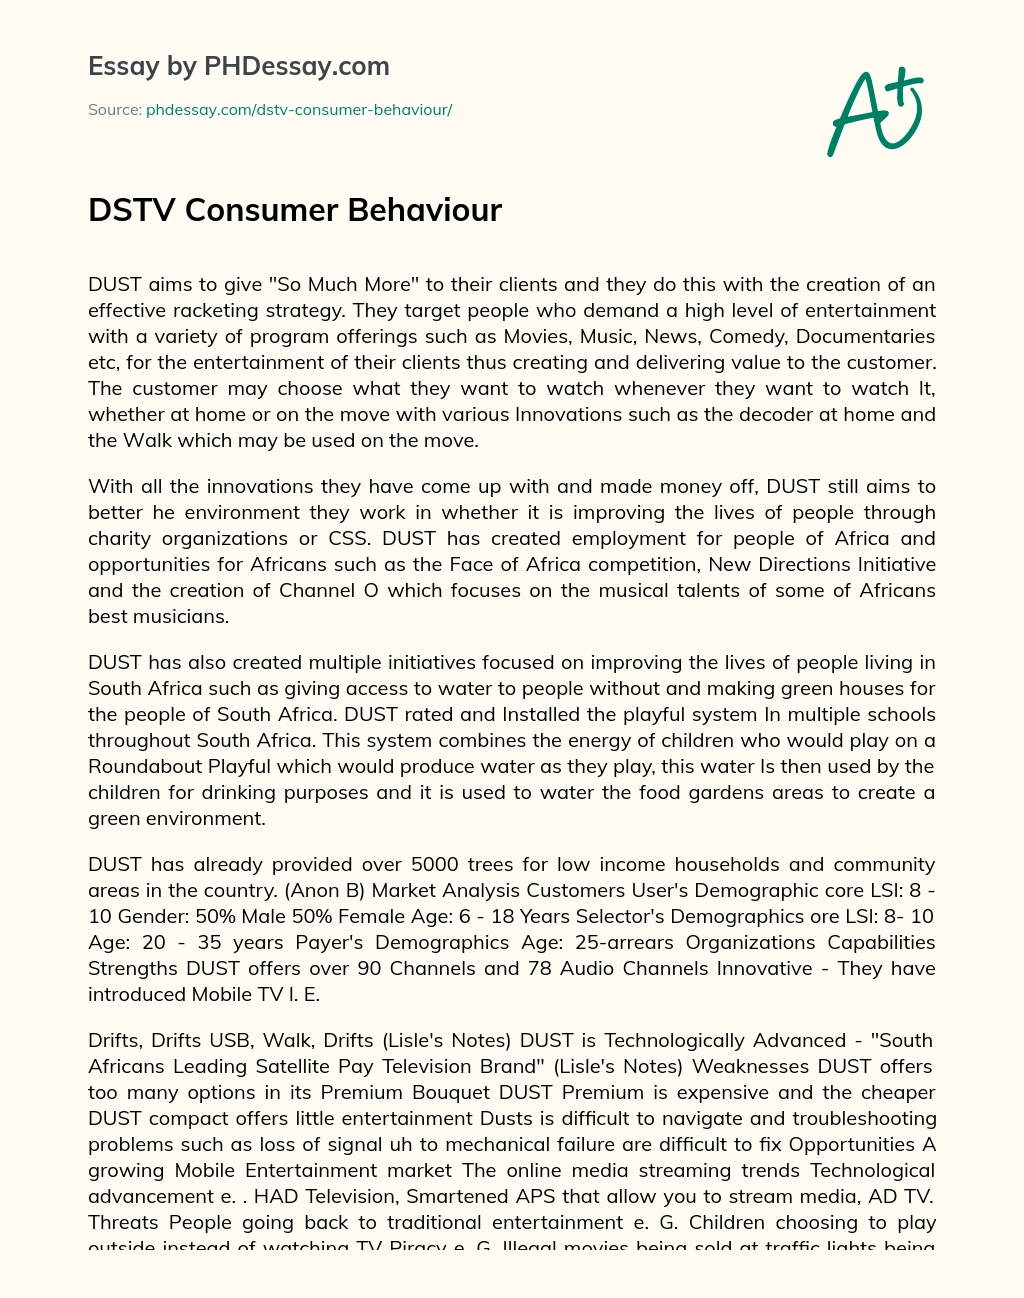 DSTV Consumer Behaviour essay